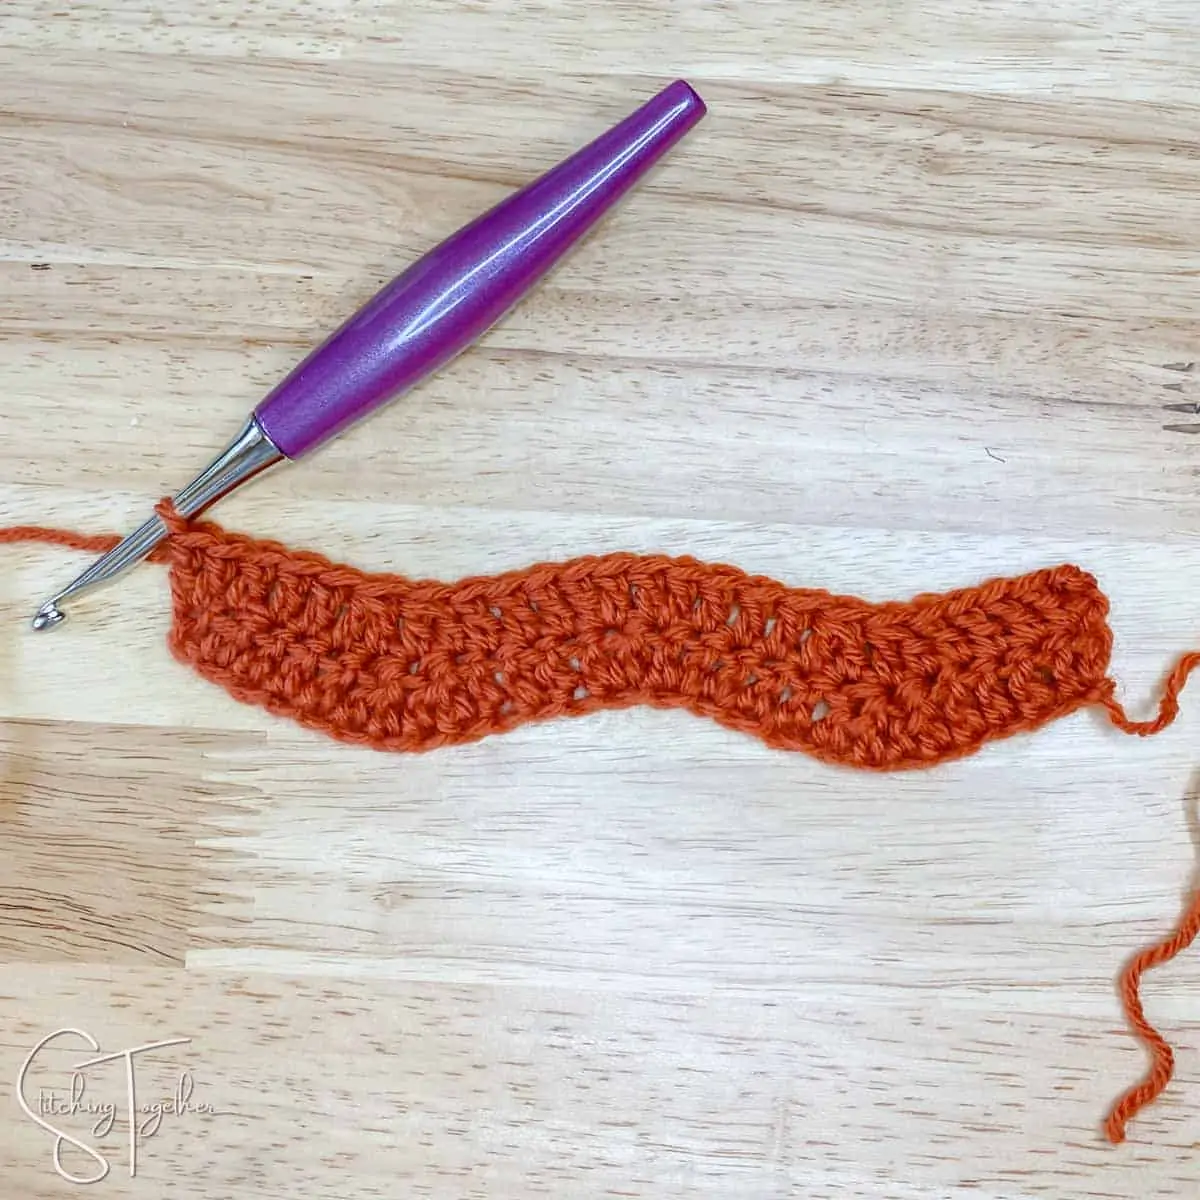 a few rows of competed ripple stitch in orange yarn